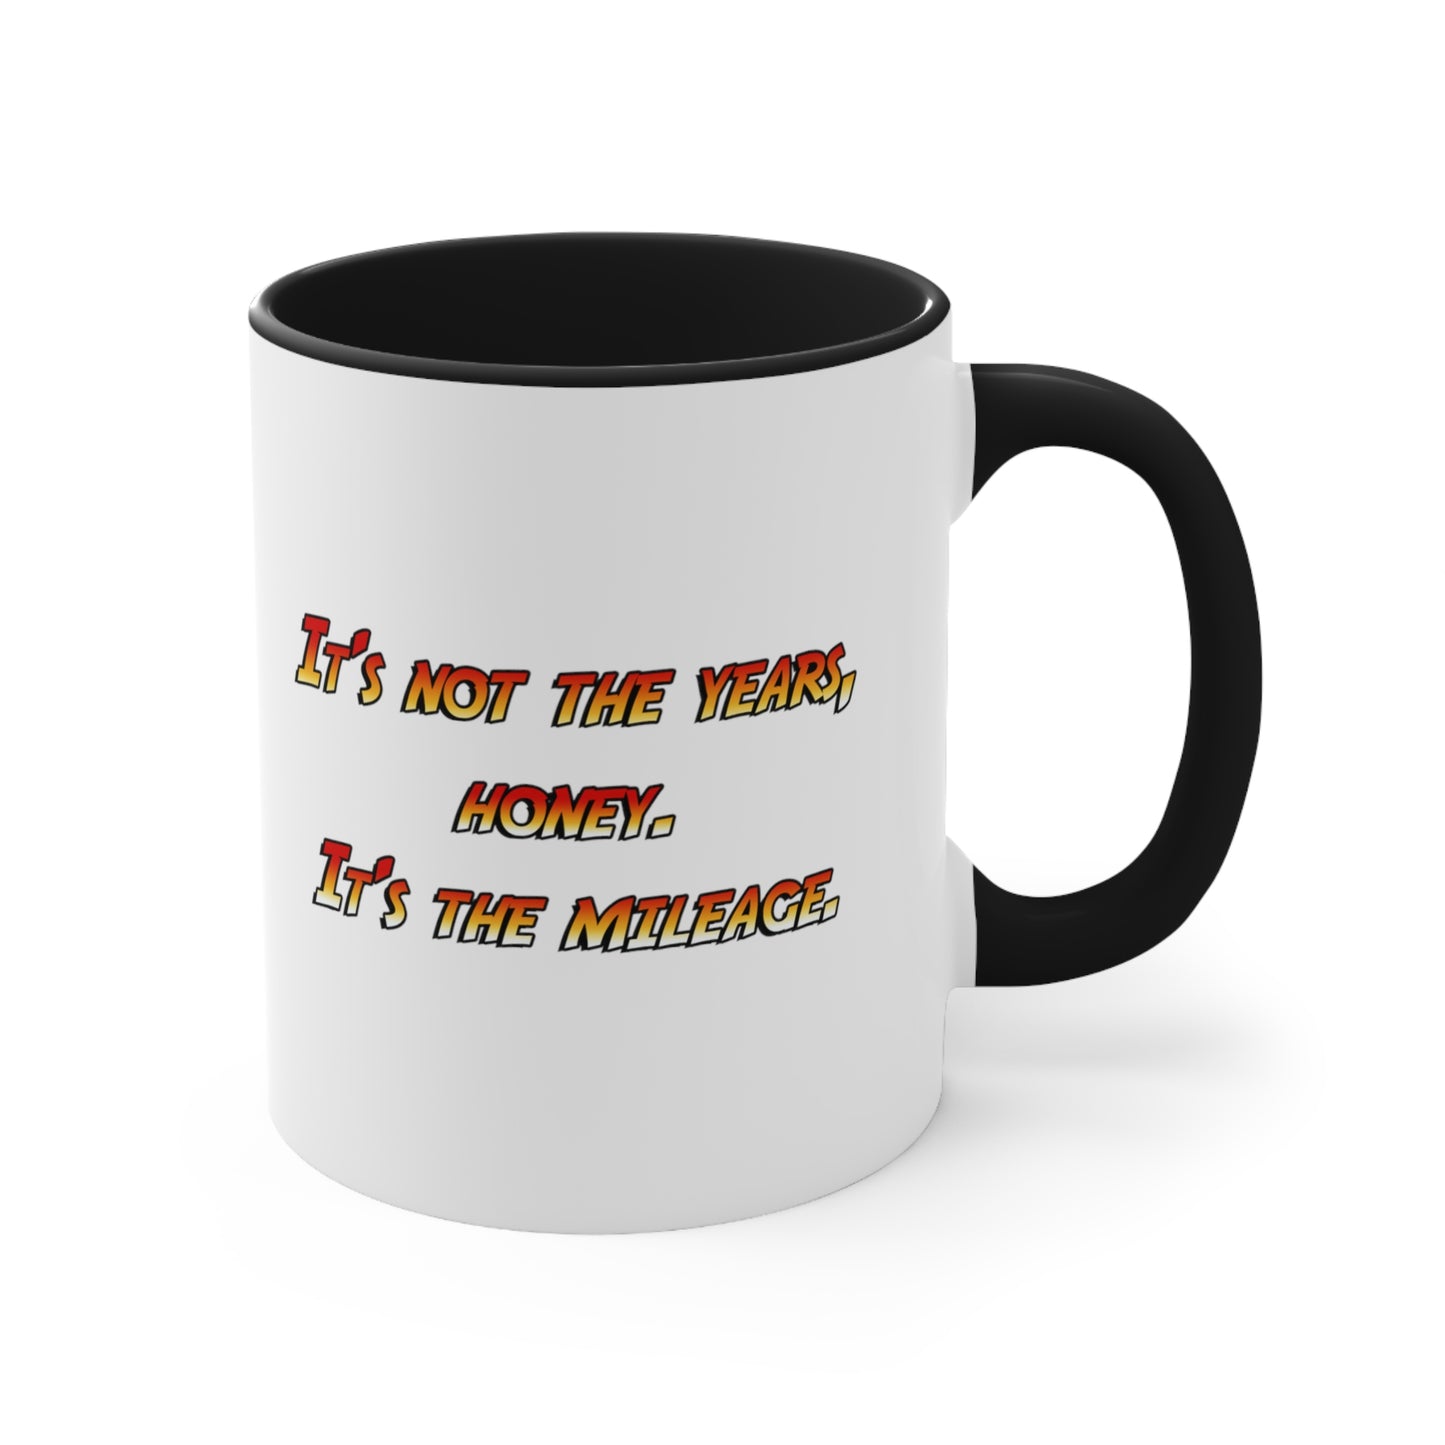 Not the Years - Indiana Jones Inspired Accent Coffee Mug, 11oz